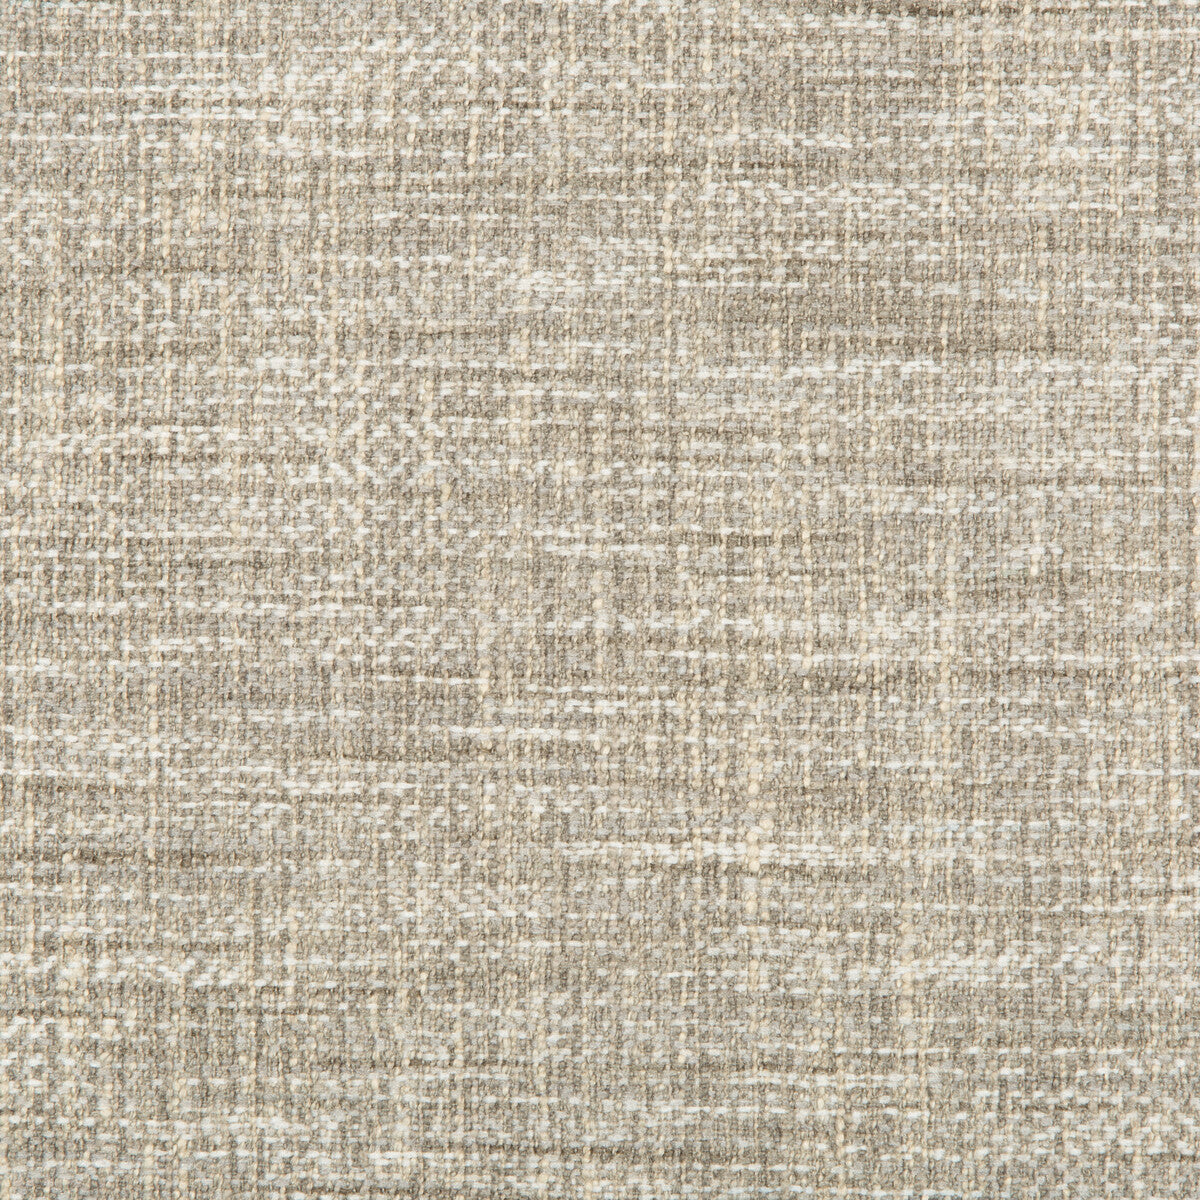 Kravet Smart fabric in 35318-106 color - pattern 35318.106.0 - by Kravet Smart in the Performance Kravetarmor collection